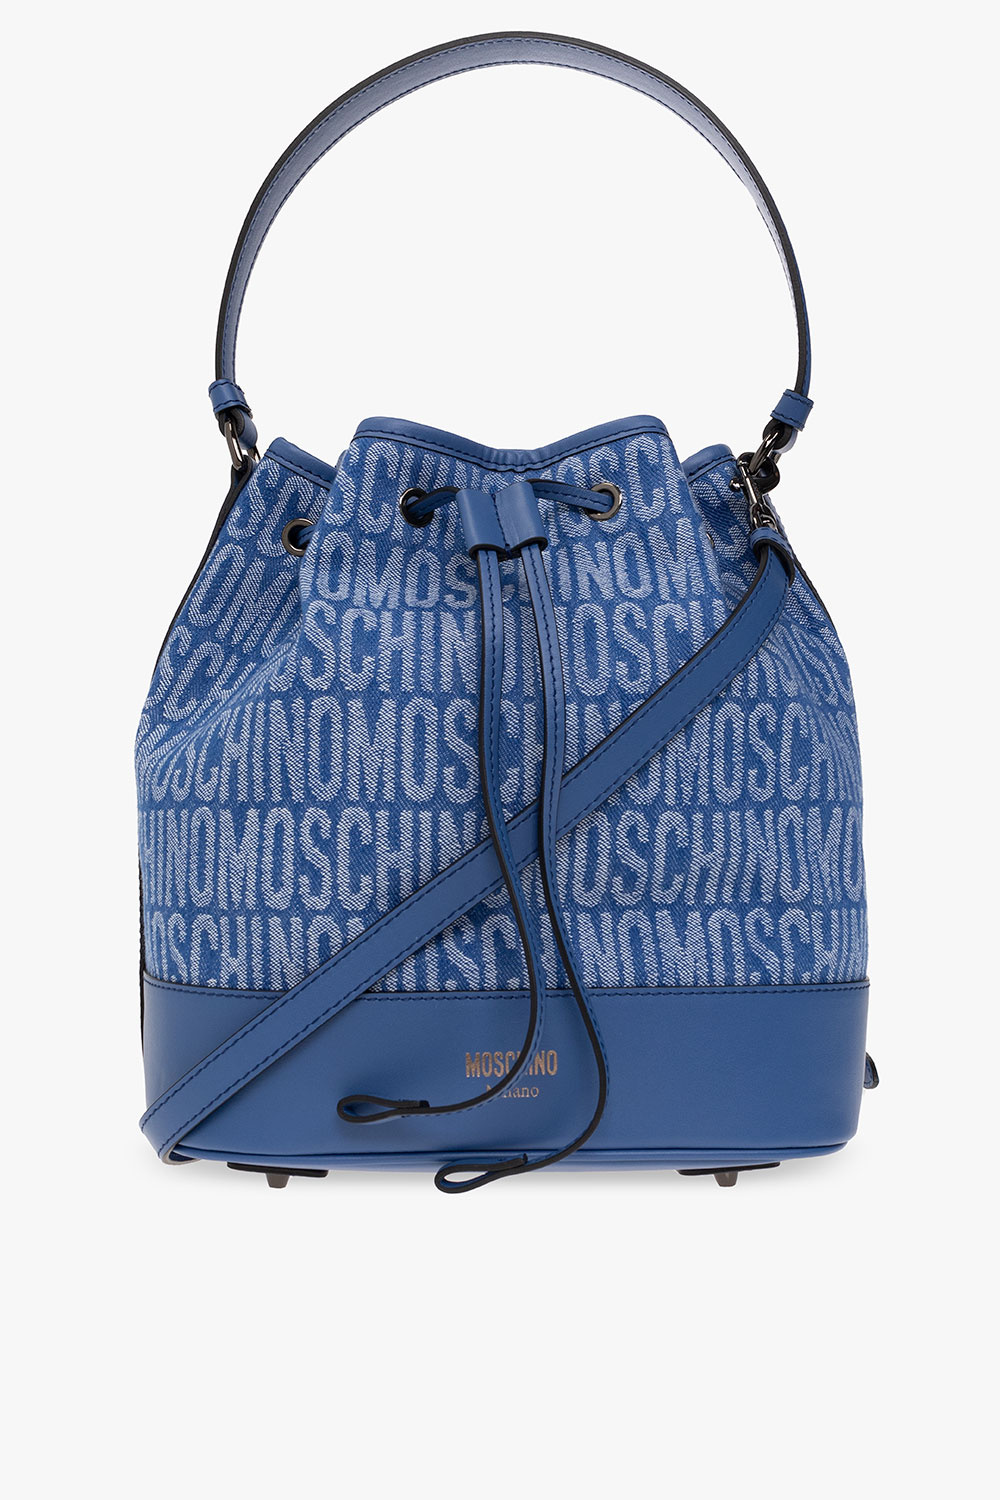 Blue Shoulder bag with logo Moschino - Vitkac France